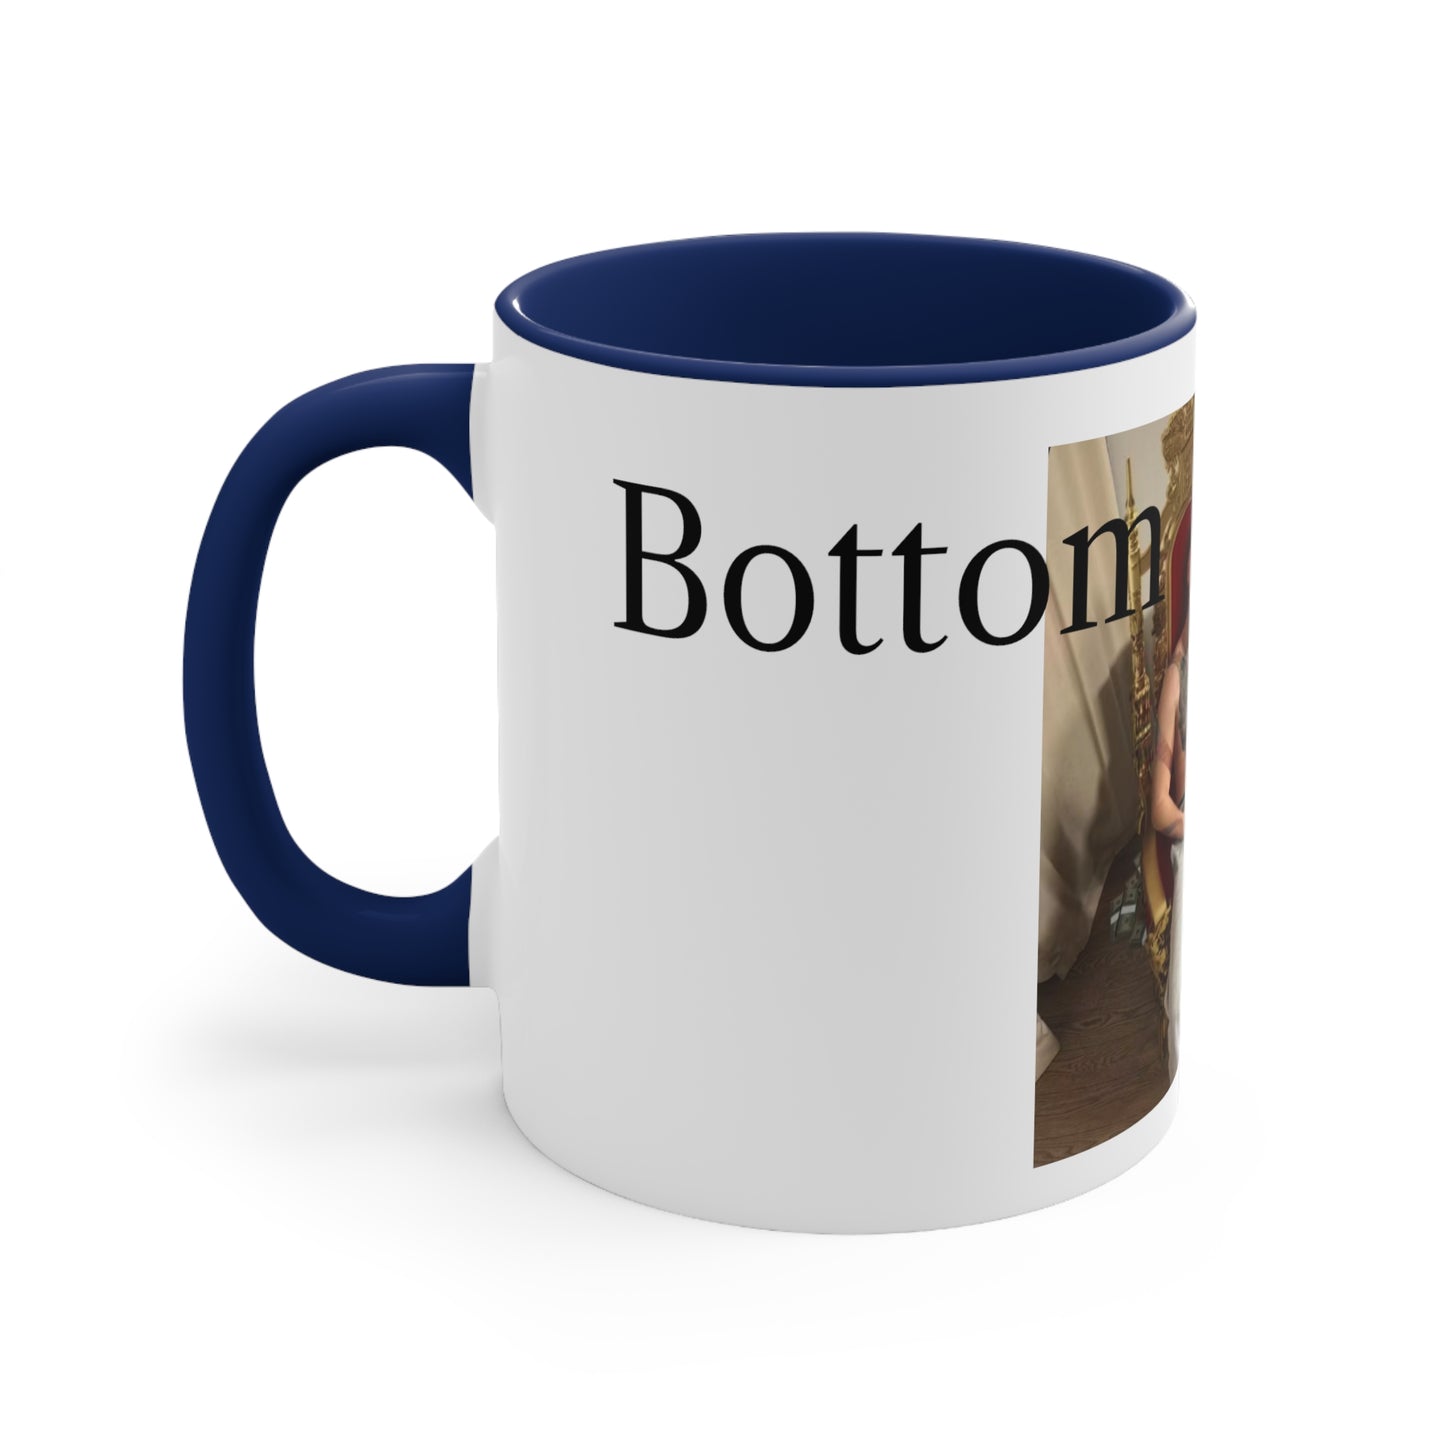 Bottom G Mug